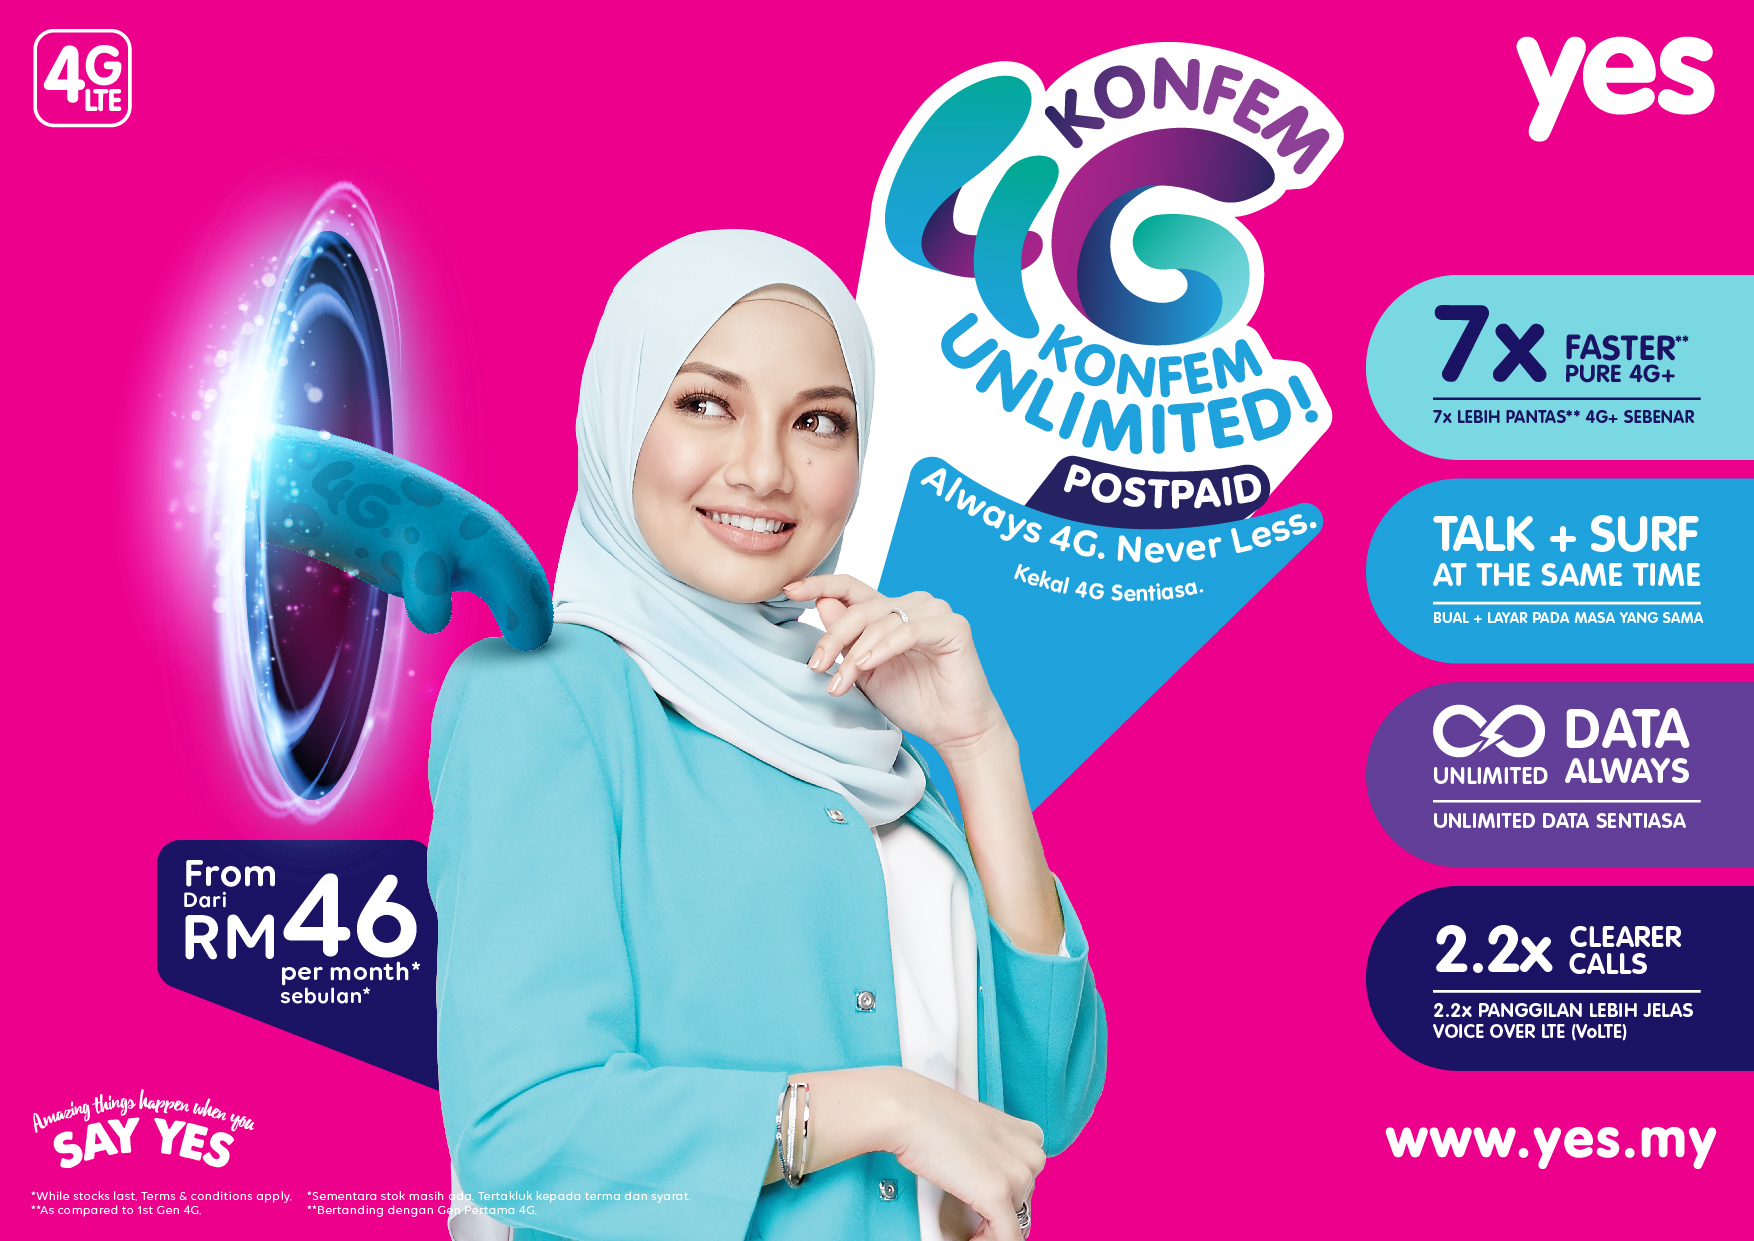 Yes 4g Launches Konfem 4g Konfem Unlimited Postpaid Plans Update